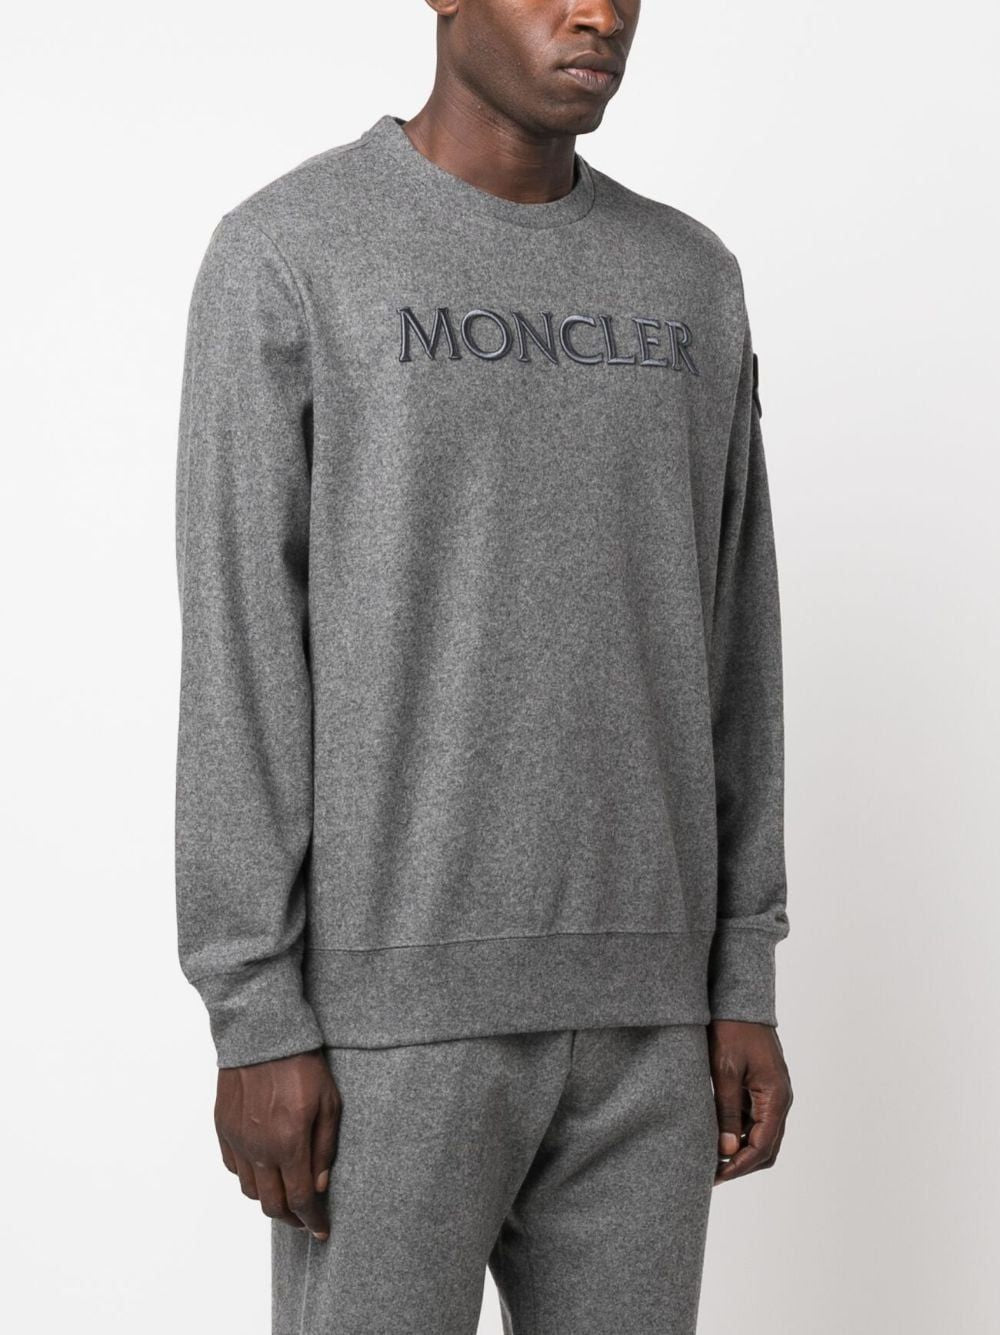 MONCLER Men's FW23 987 Sweatshirt in Base Fabric of 25% Polyamide/Nylon and 75% Virgin Wool